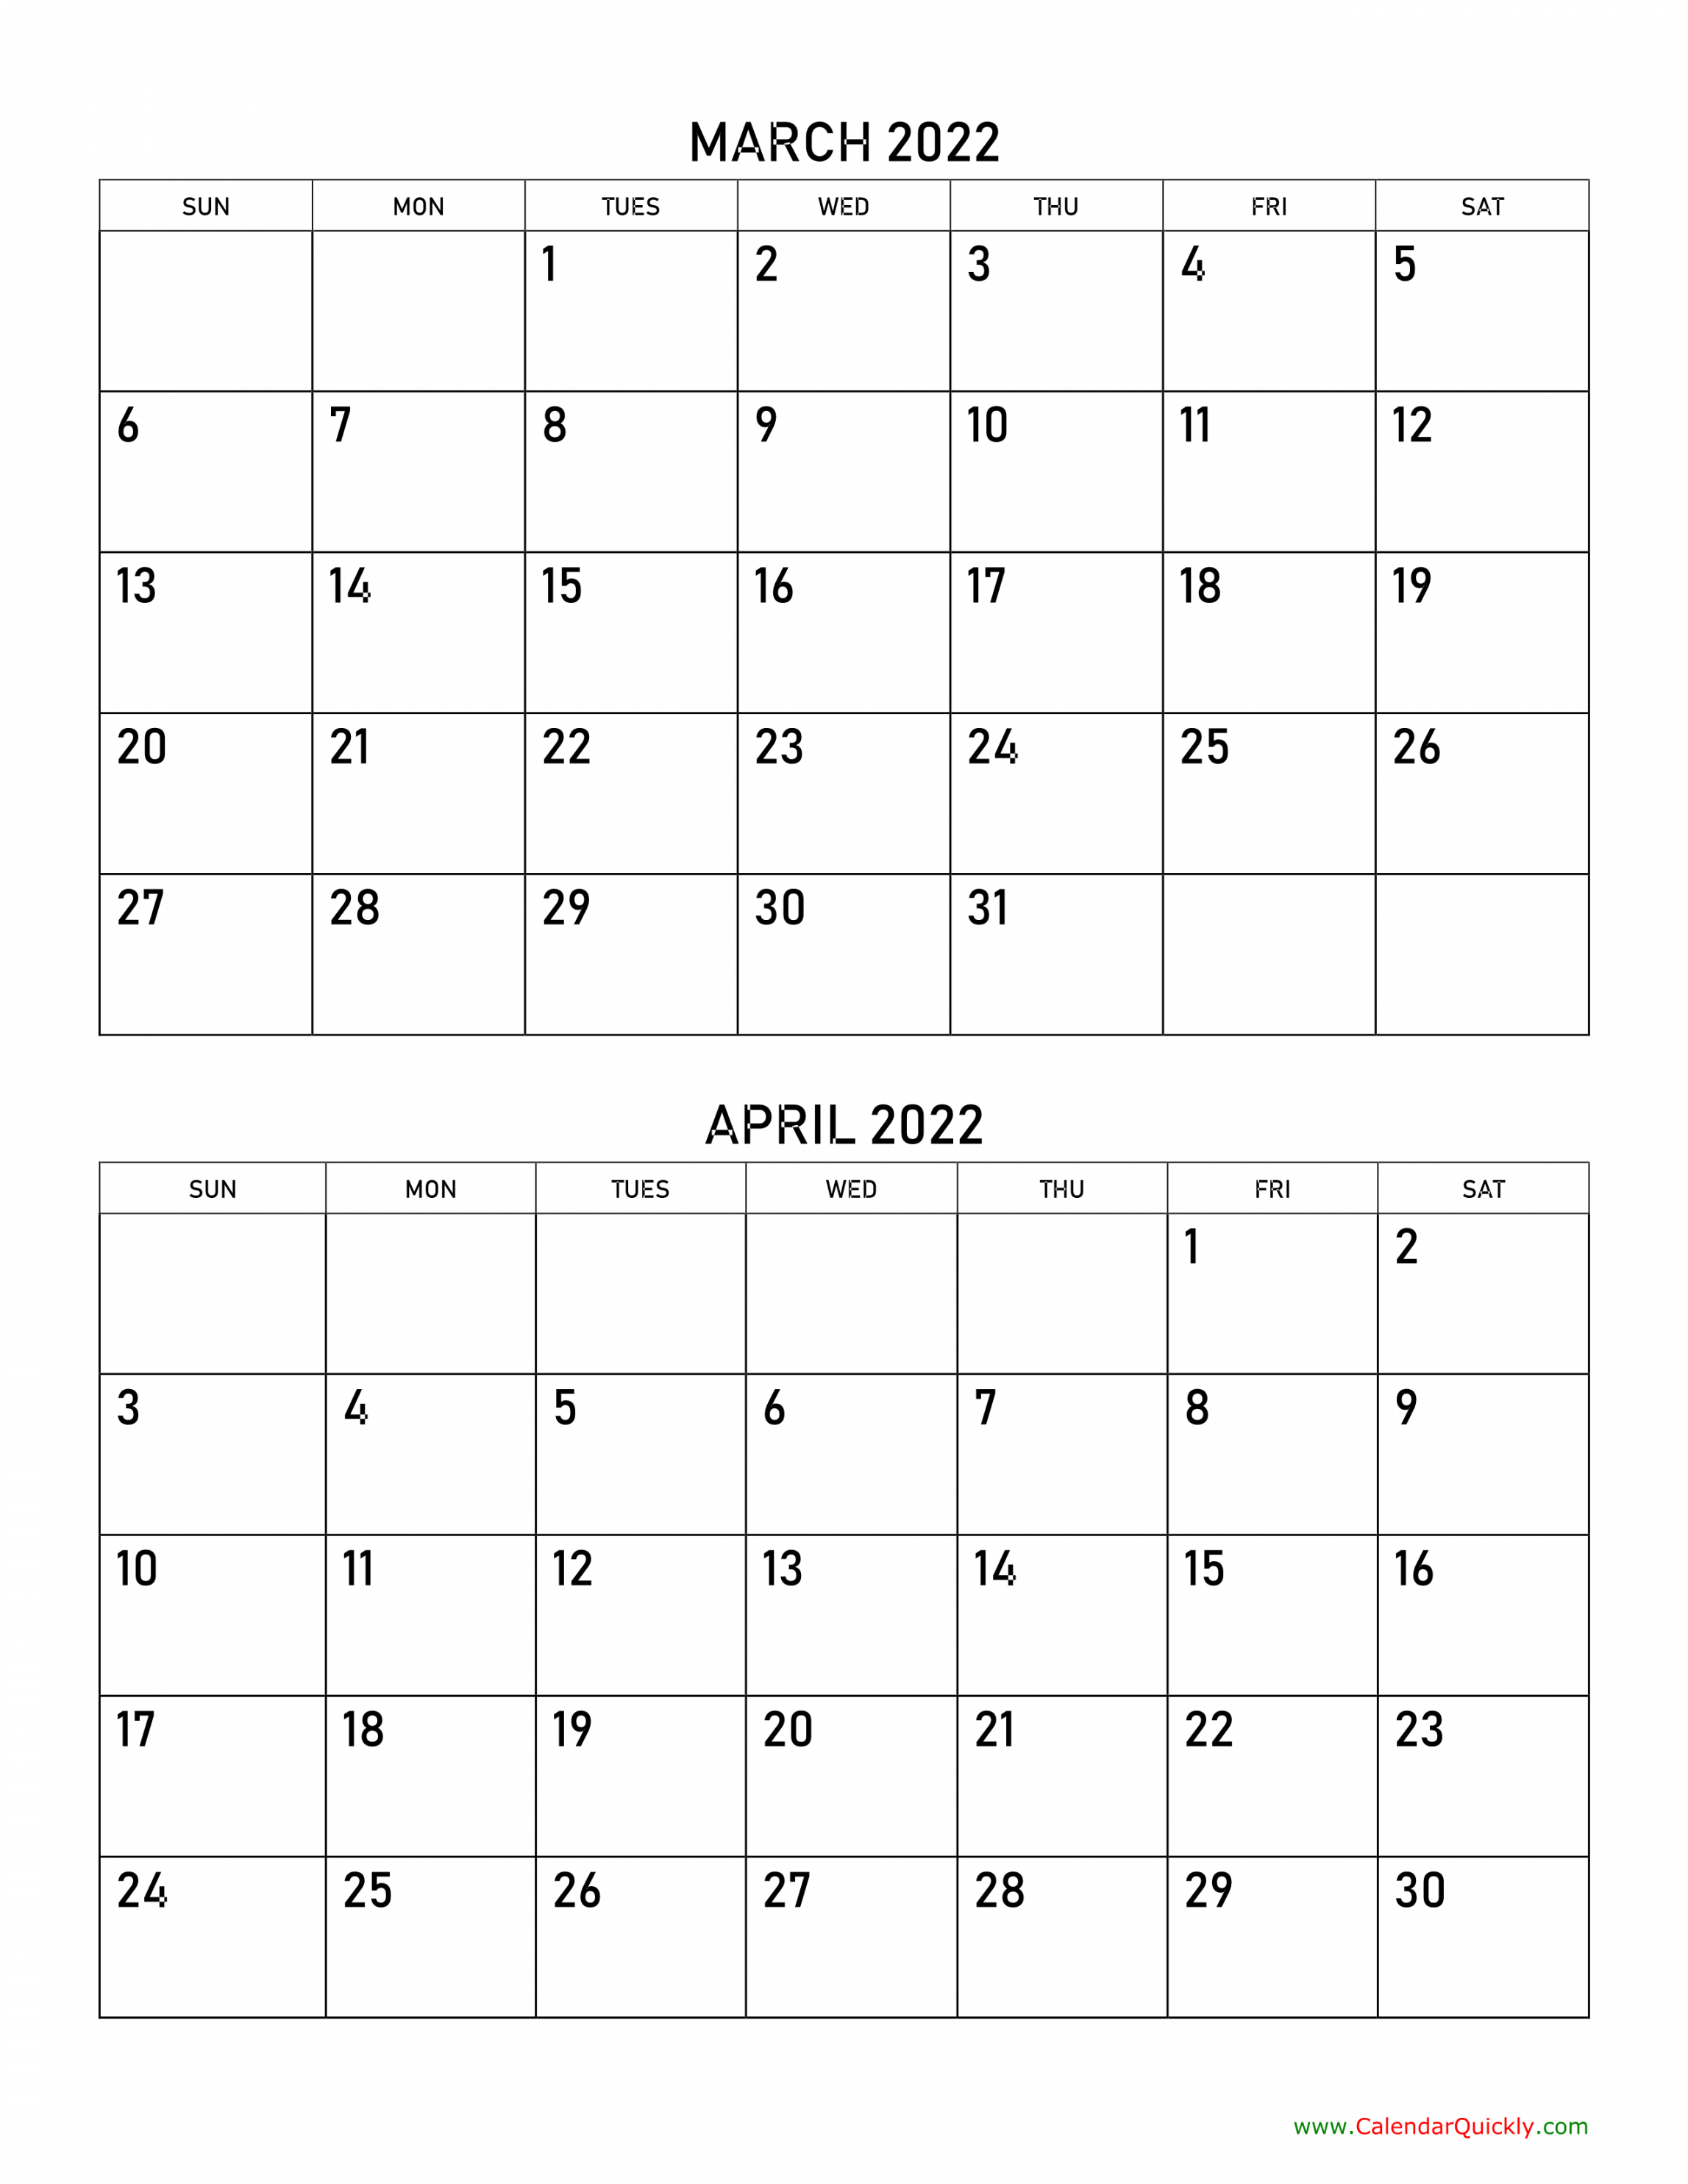 March and April Calendar Calendar Quickly